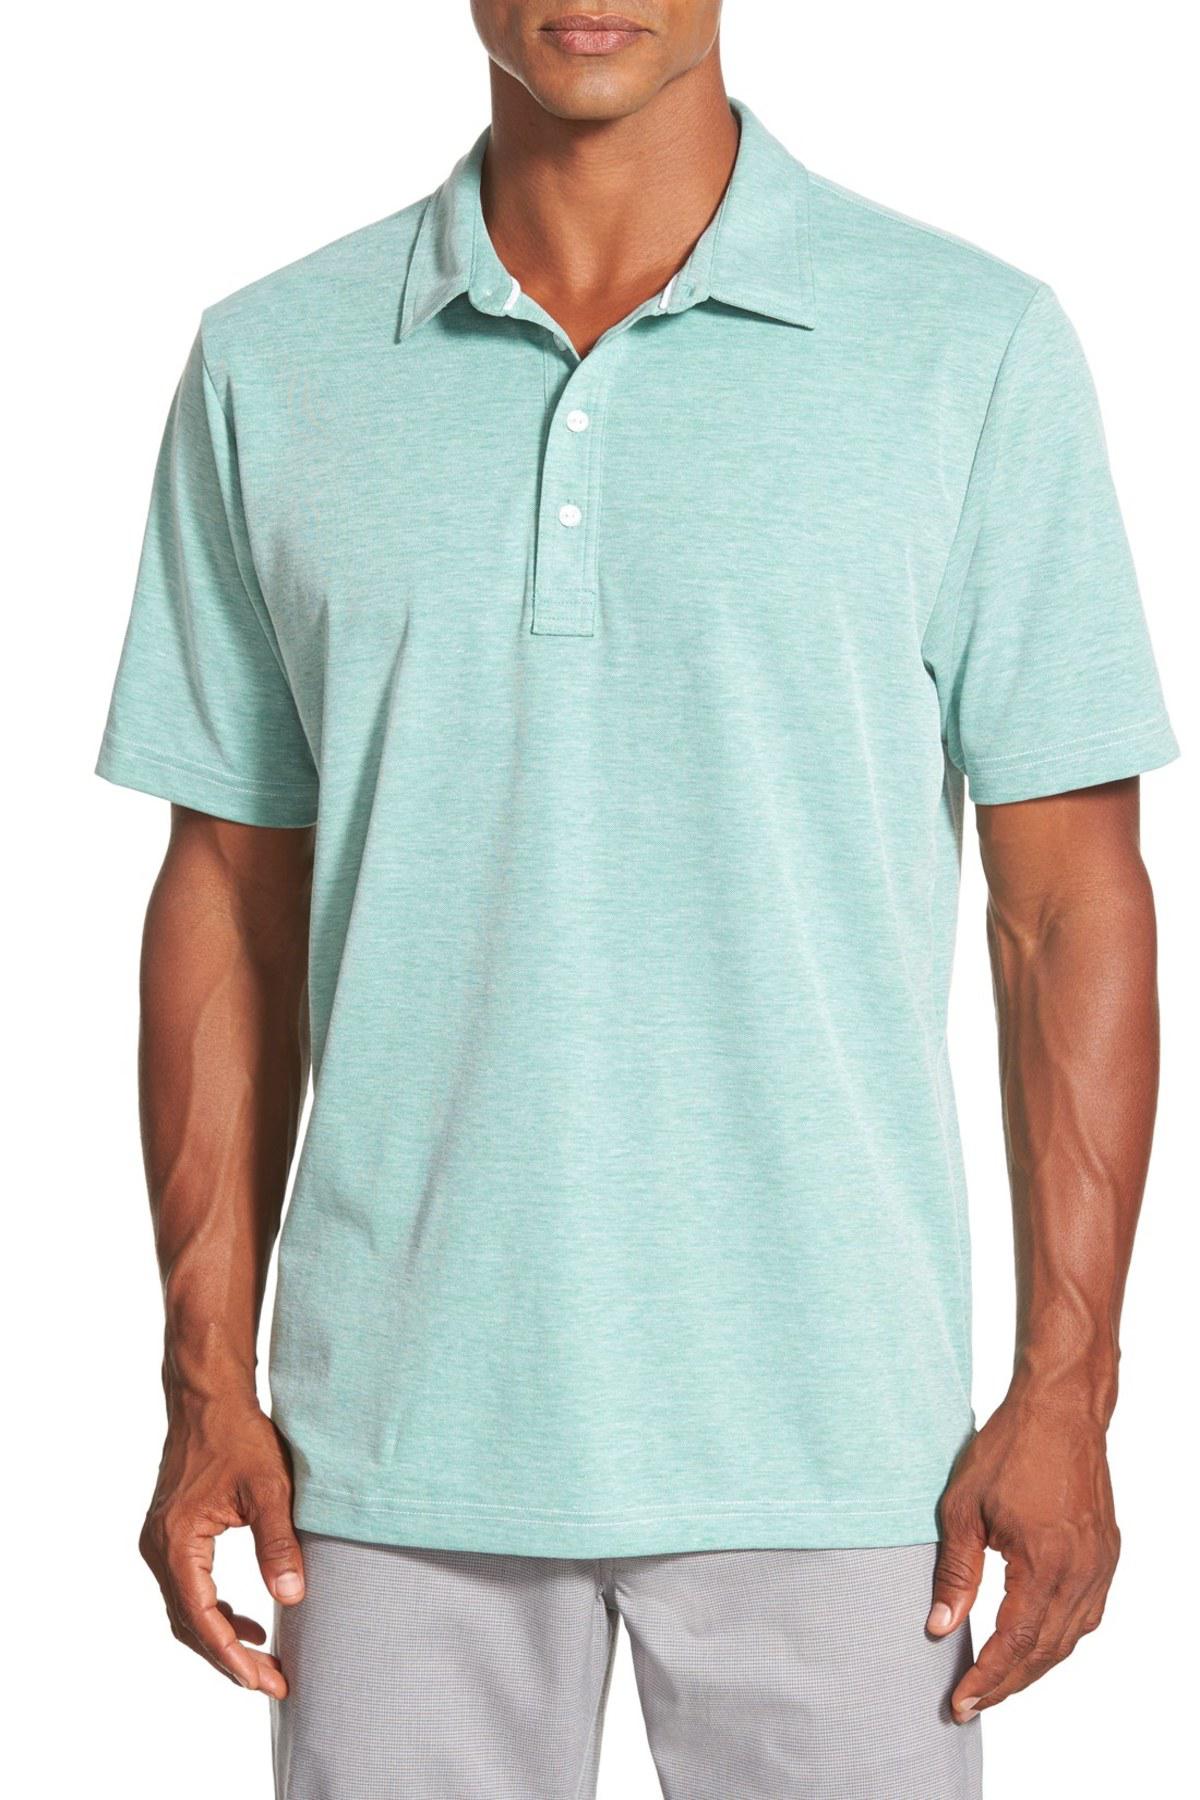 Lyst - Travis Mathew Crenshaw Golf Polo Shirt in Blue for Men